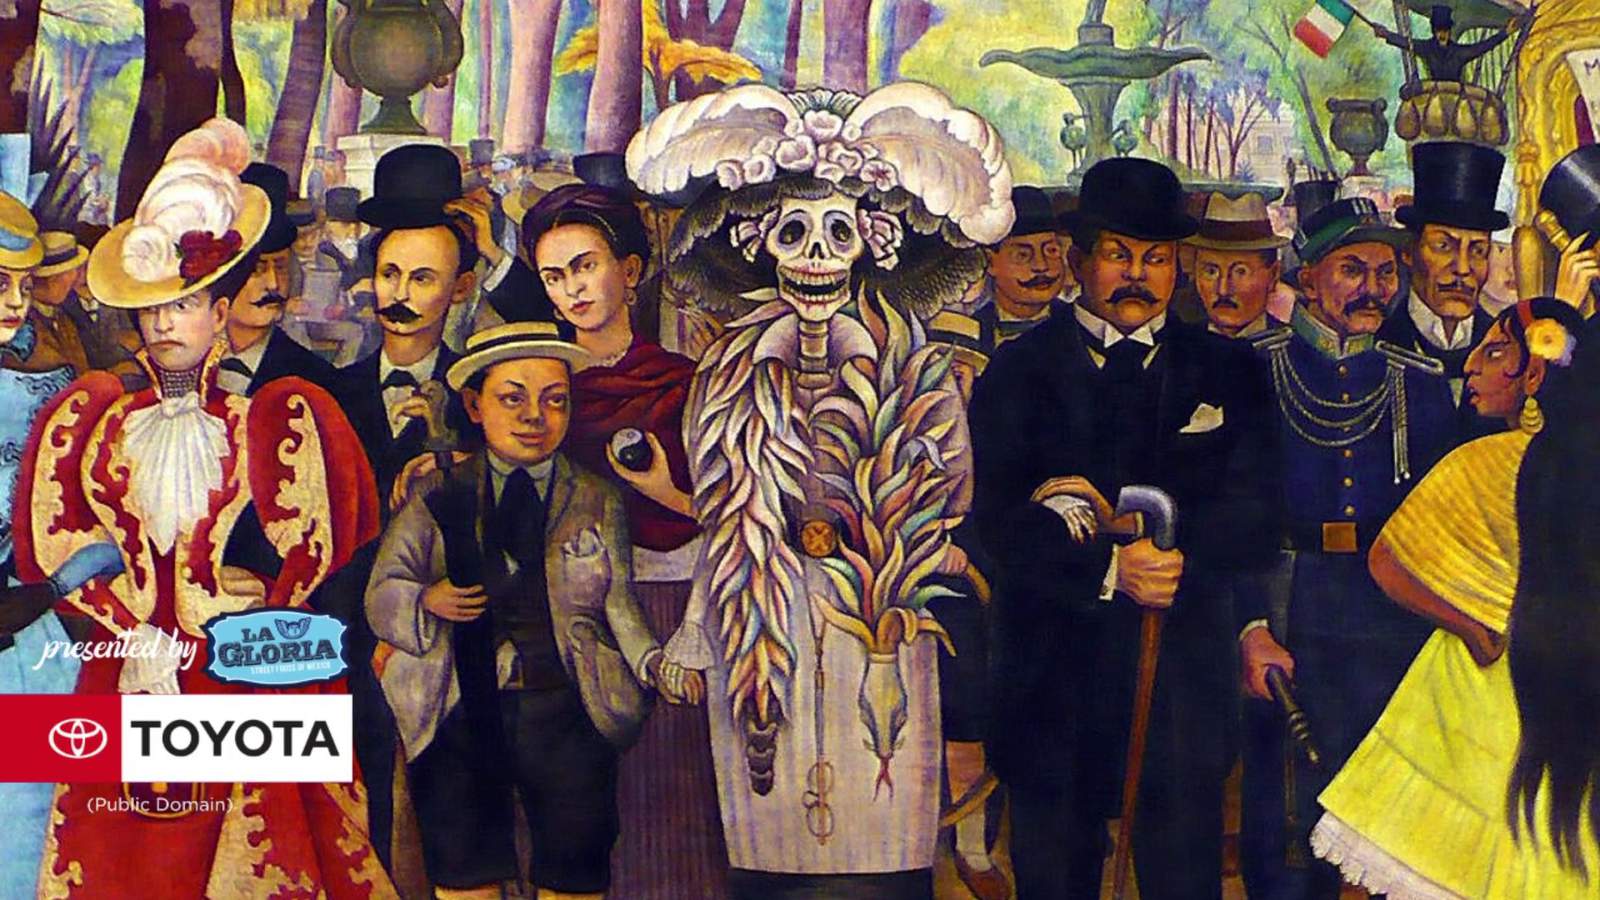 Story behind Mexican artist who inspired 'La Calavera Catrina'